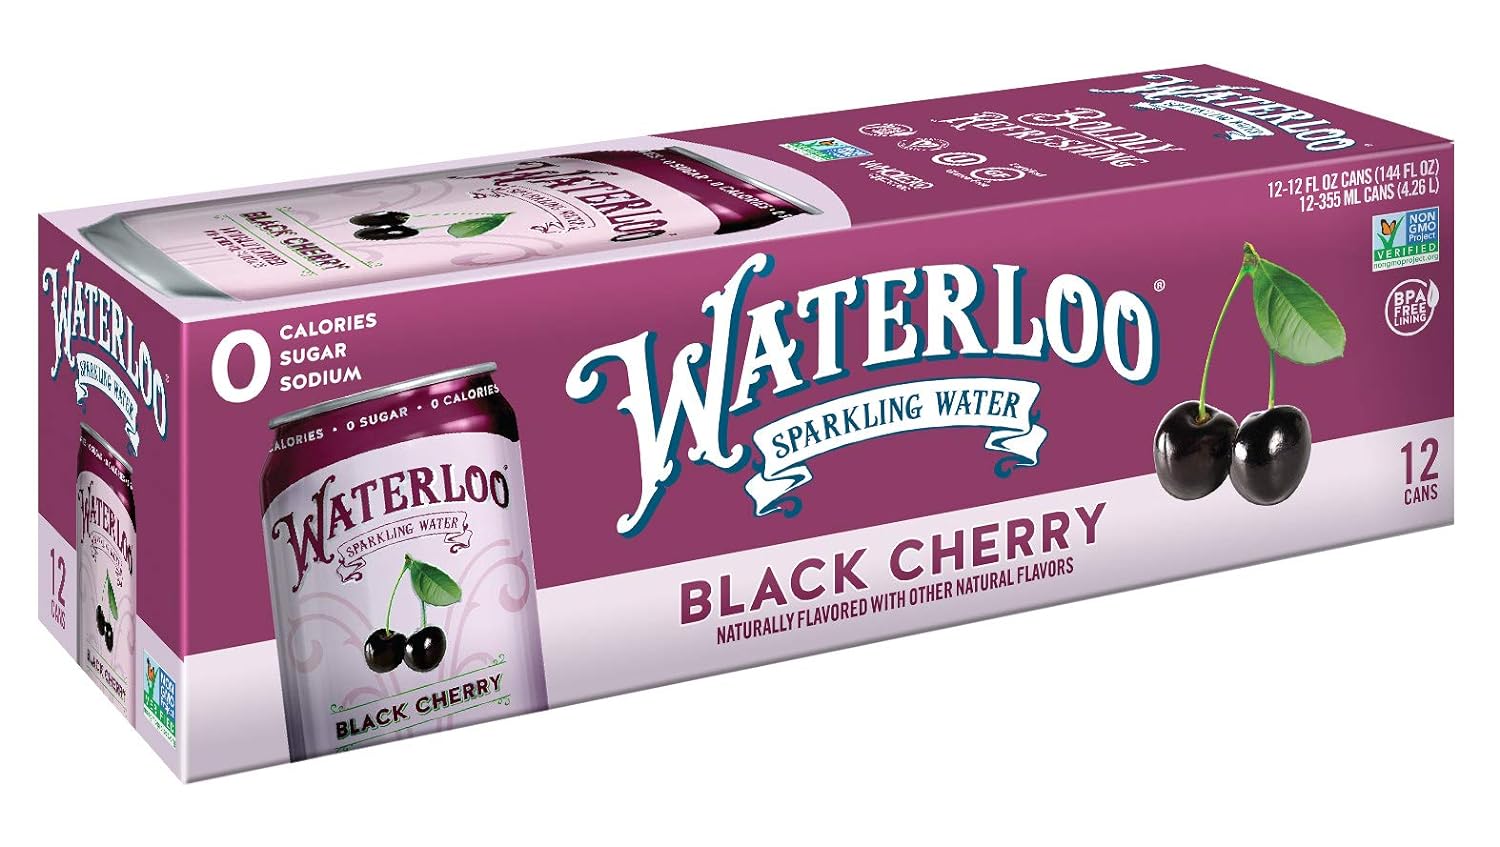 Waterloo Sparkling Water Black Cherry / 144 fl. oz